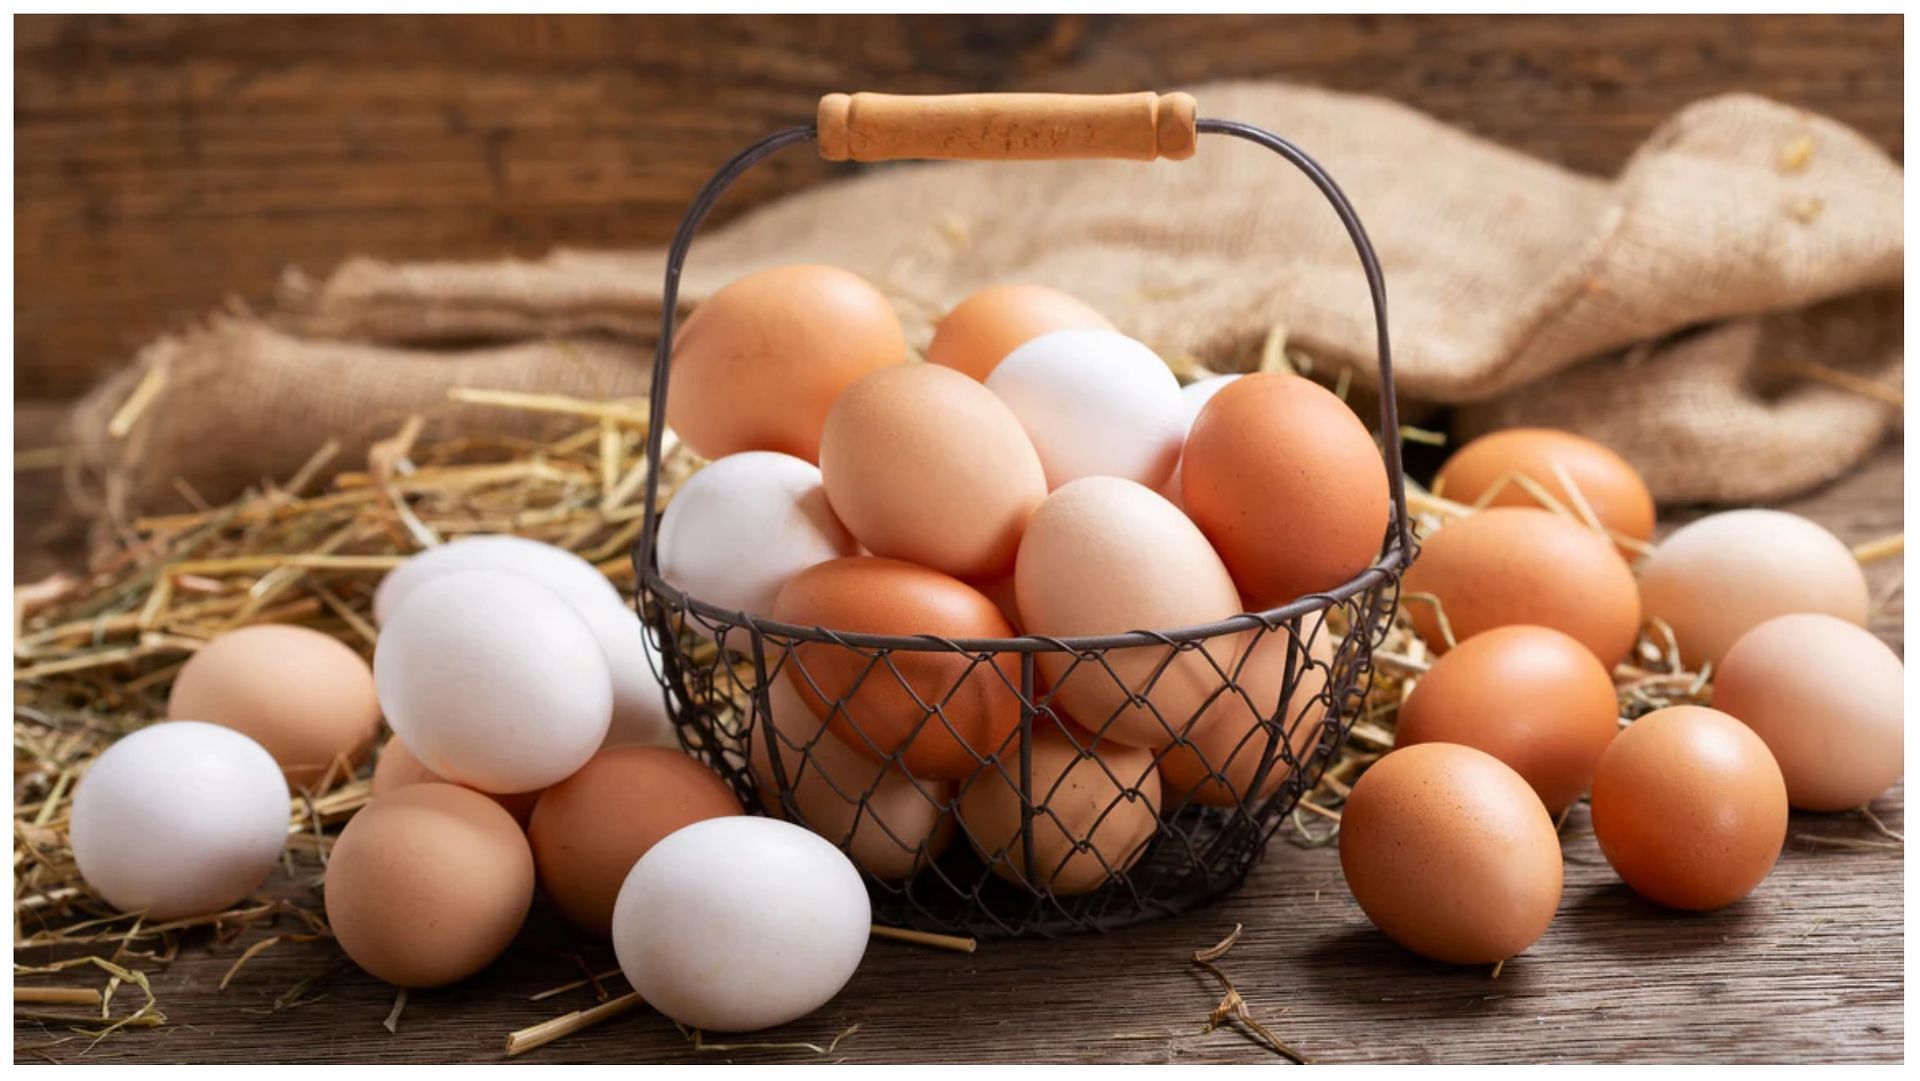 California faces eggs shortage due to avian flu! (Image via Wellversed)